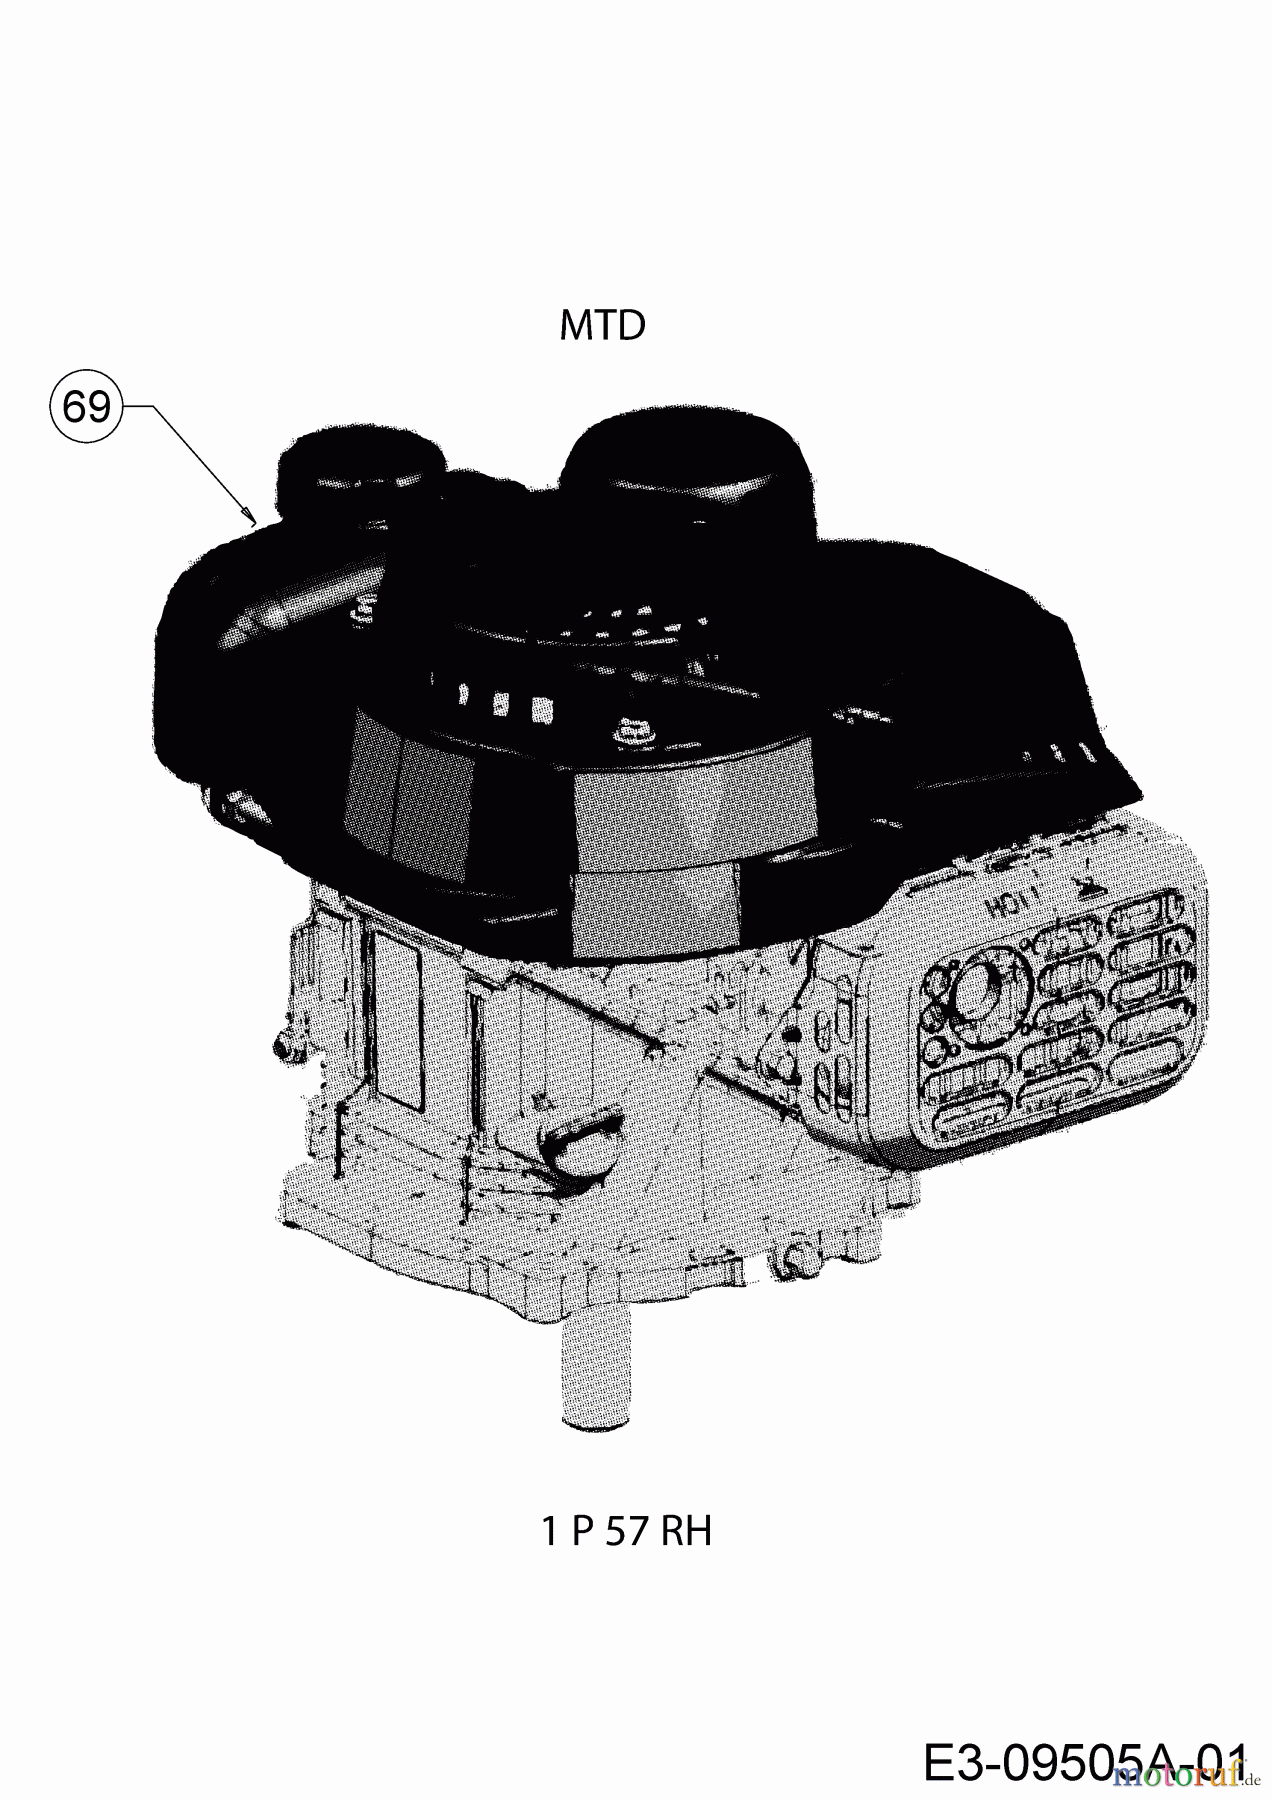  MTD Motormäher Smart 42 PO 11C-LASJ600 (2019) Motor MTD